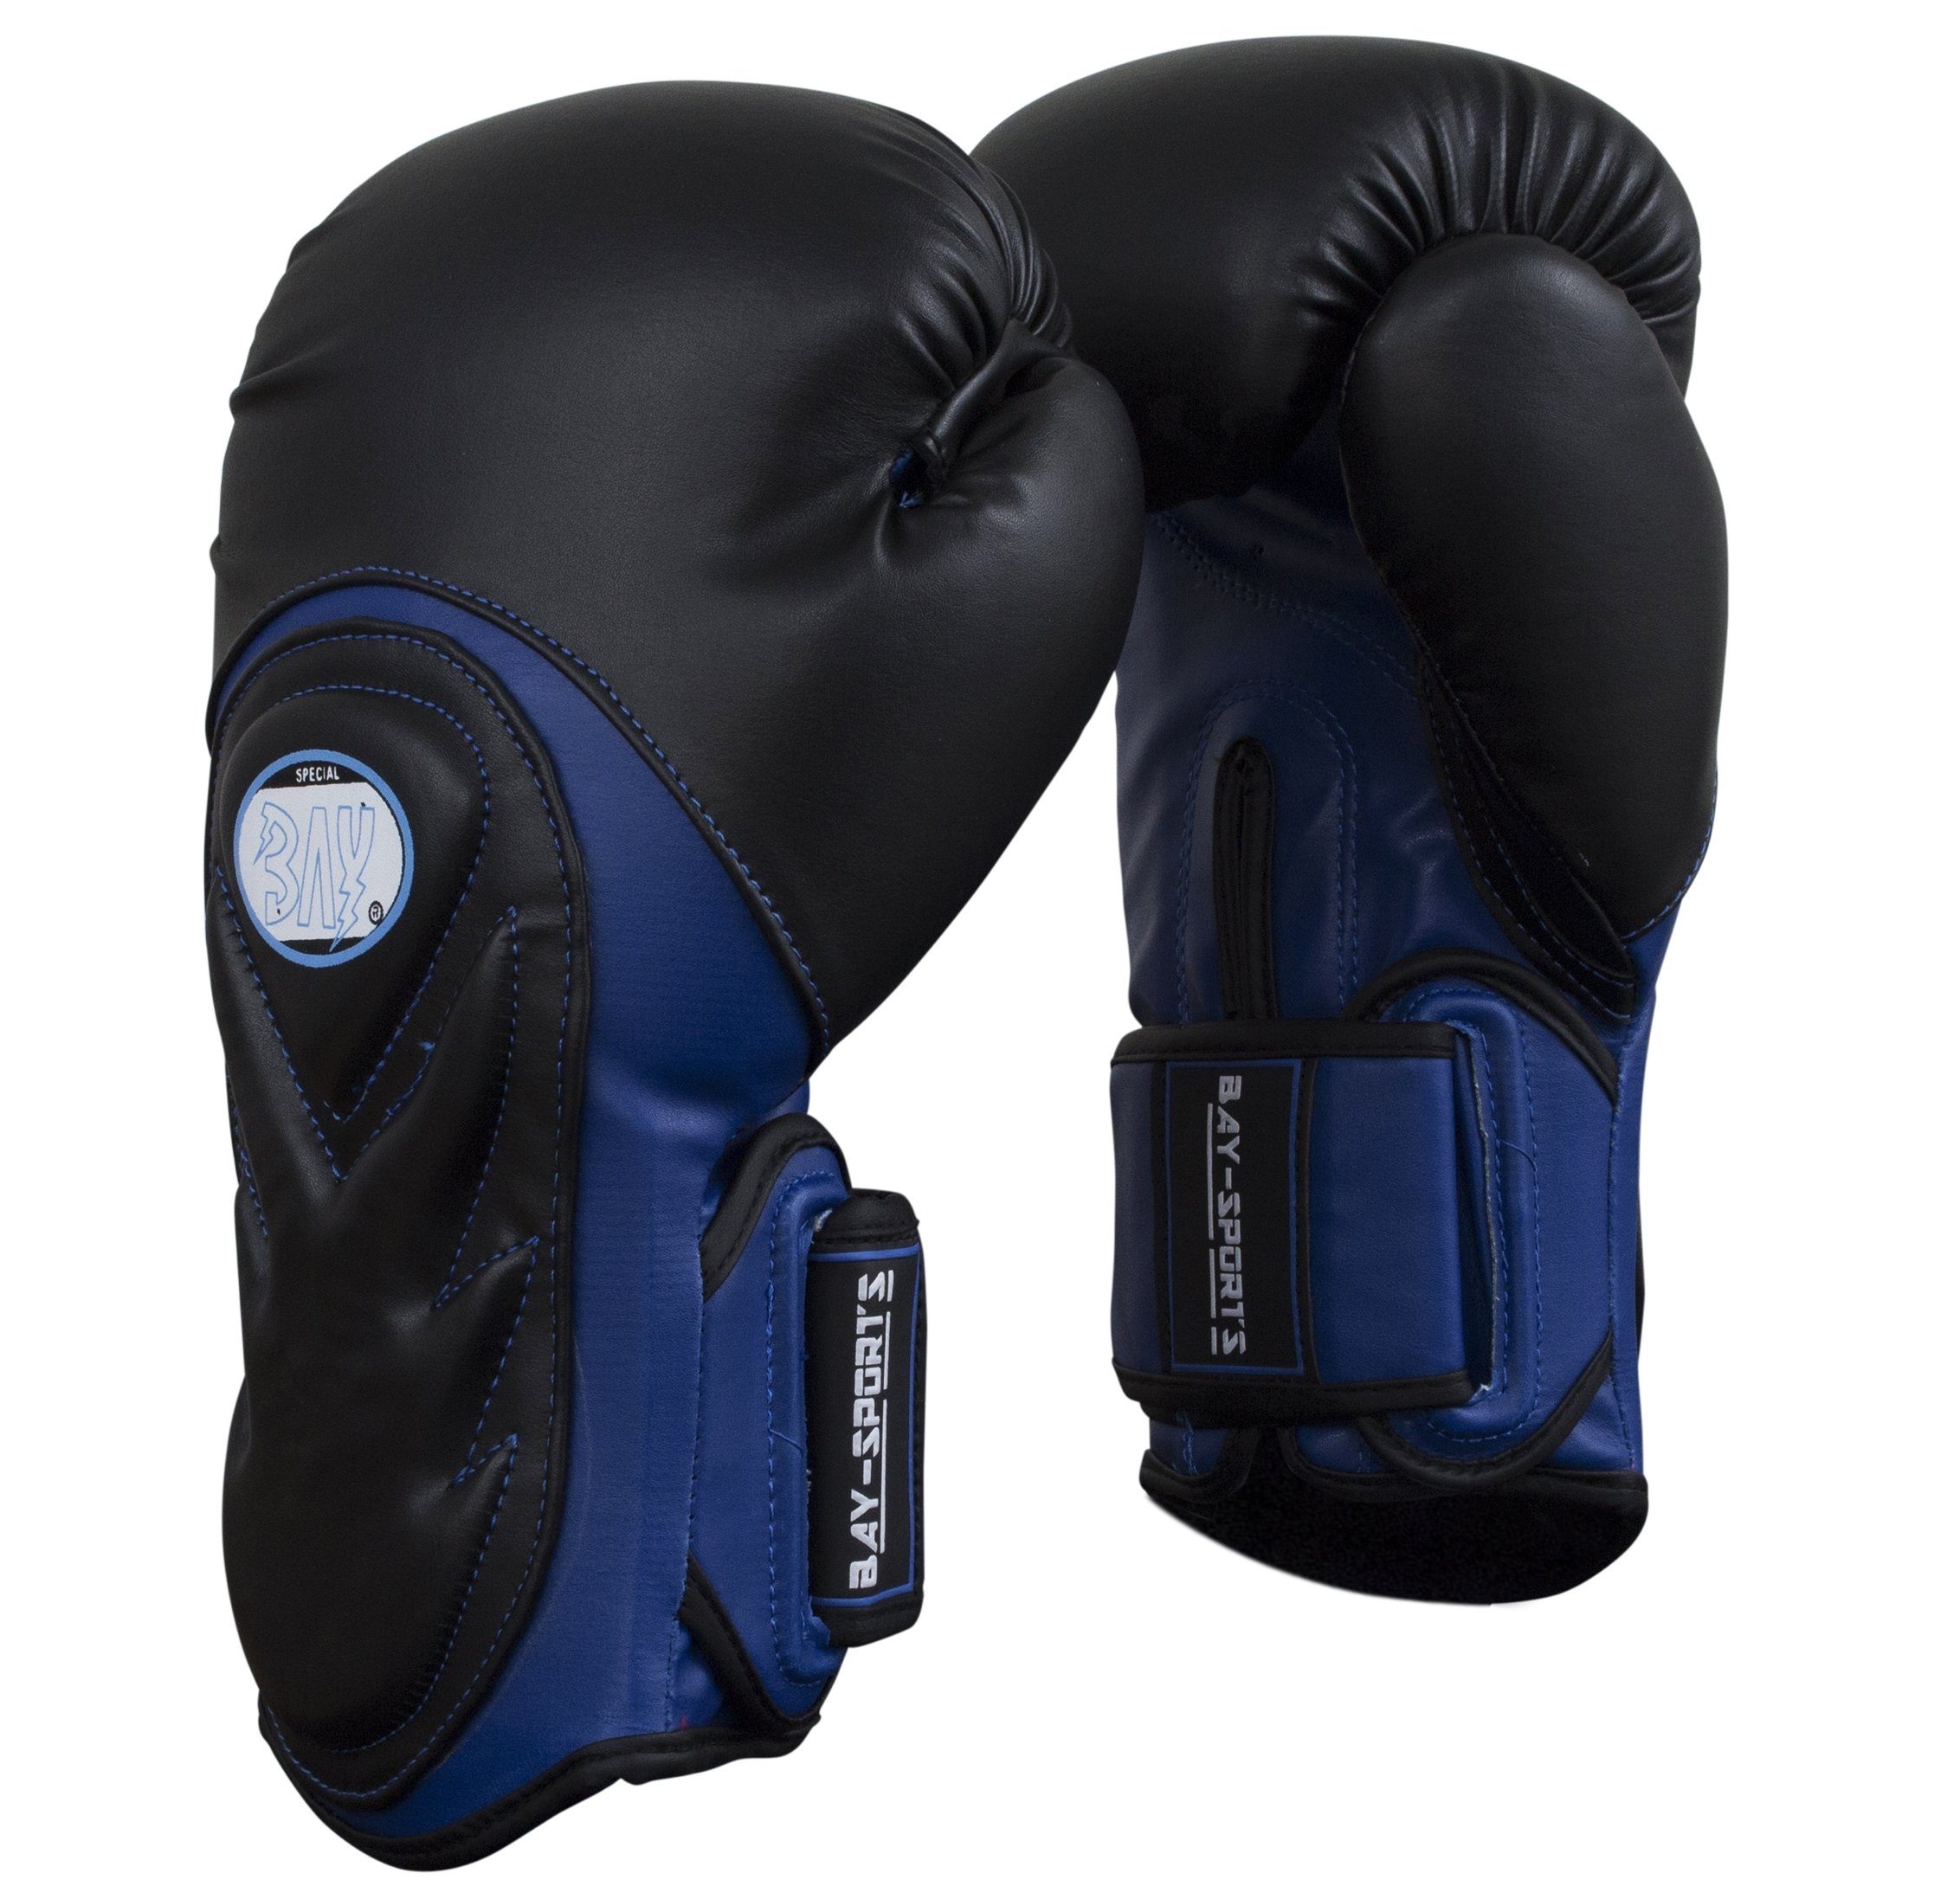 schwarz/blau Box-Handschuhe Style BAY-Sports Boxen Kickboxen Bad Boxhandschuhe